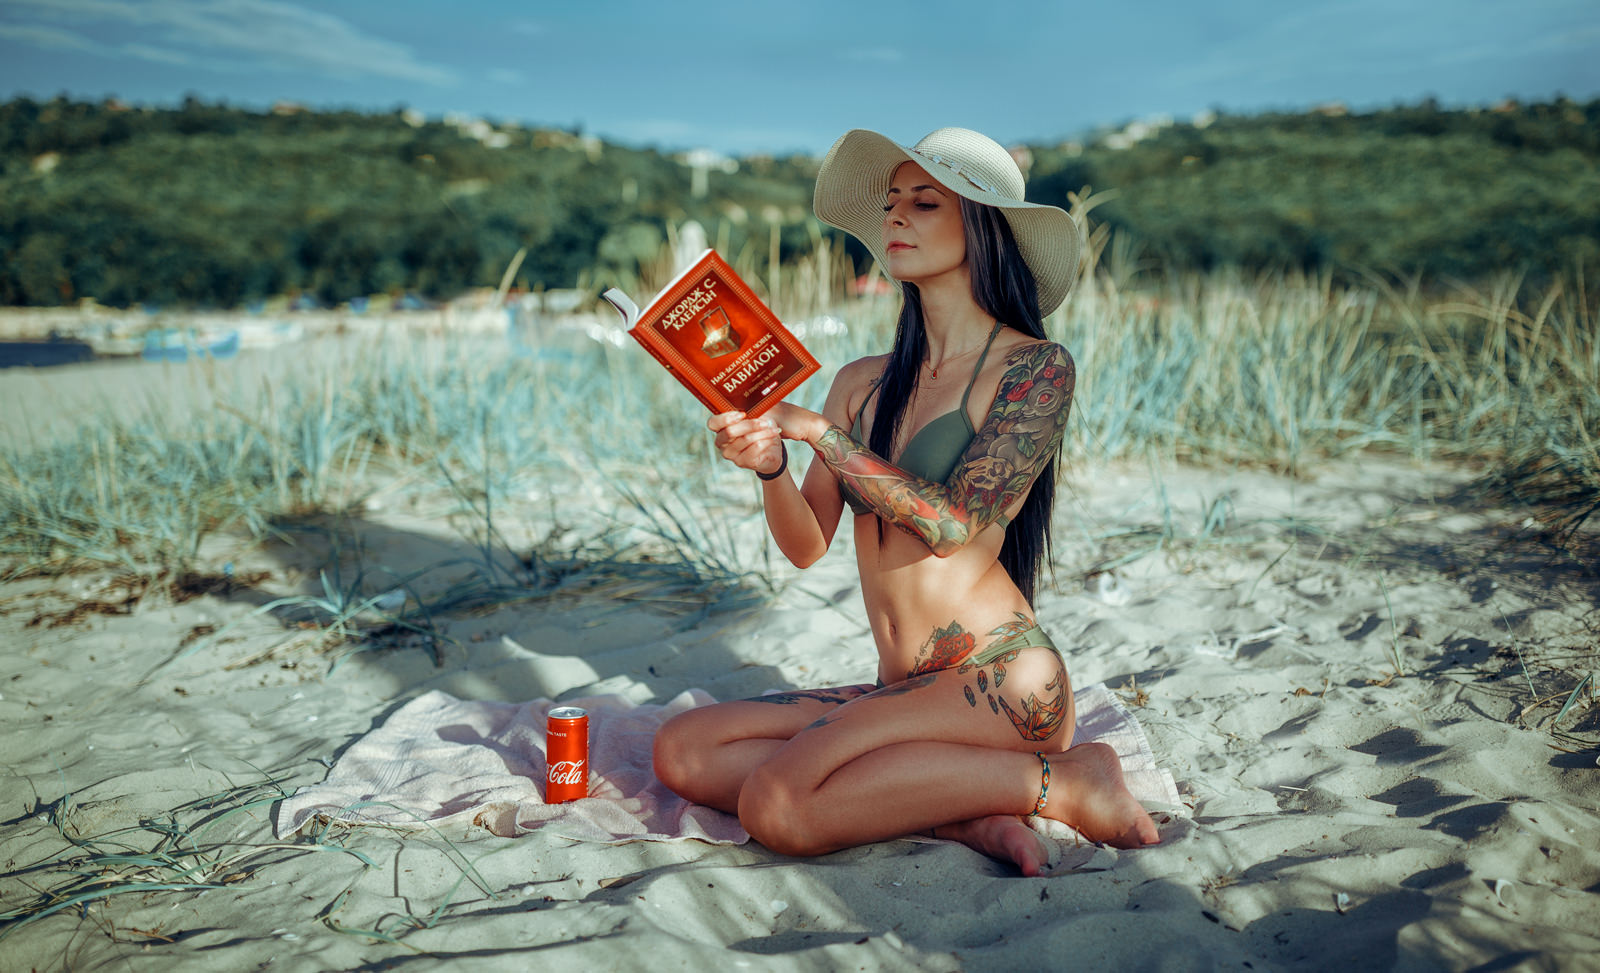 People 1600x973 women hat bikini brunette women outdoors books tattoo sand sky Coca-Cola belly sitting long hair towel